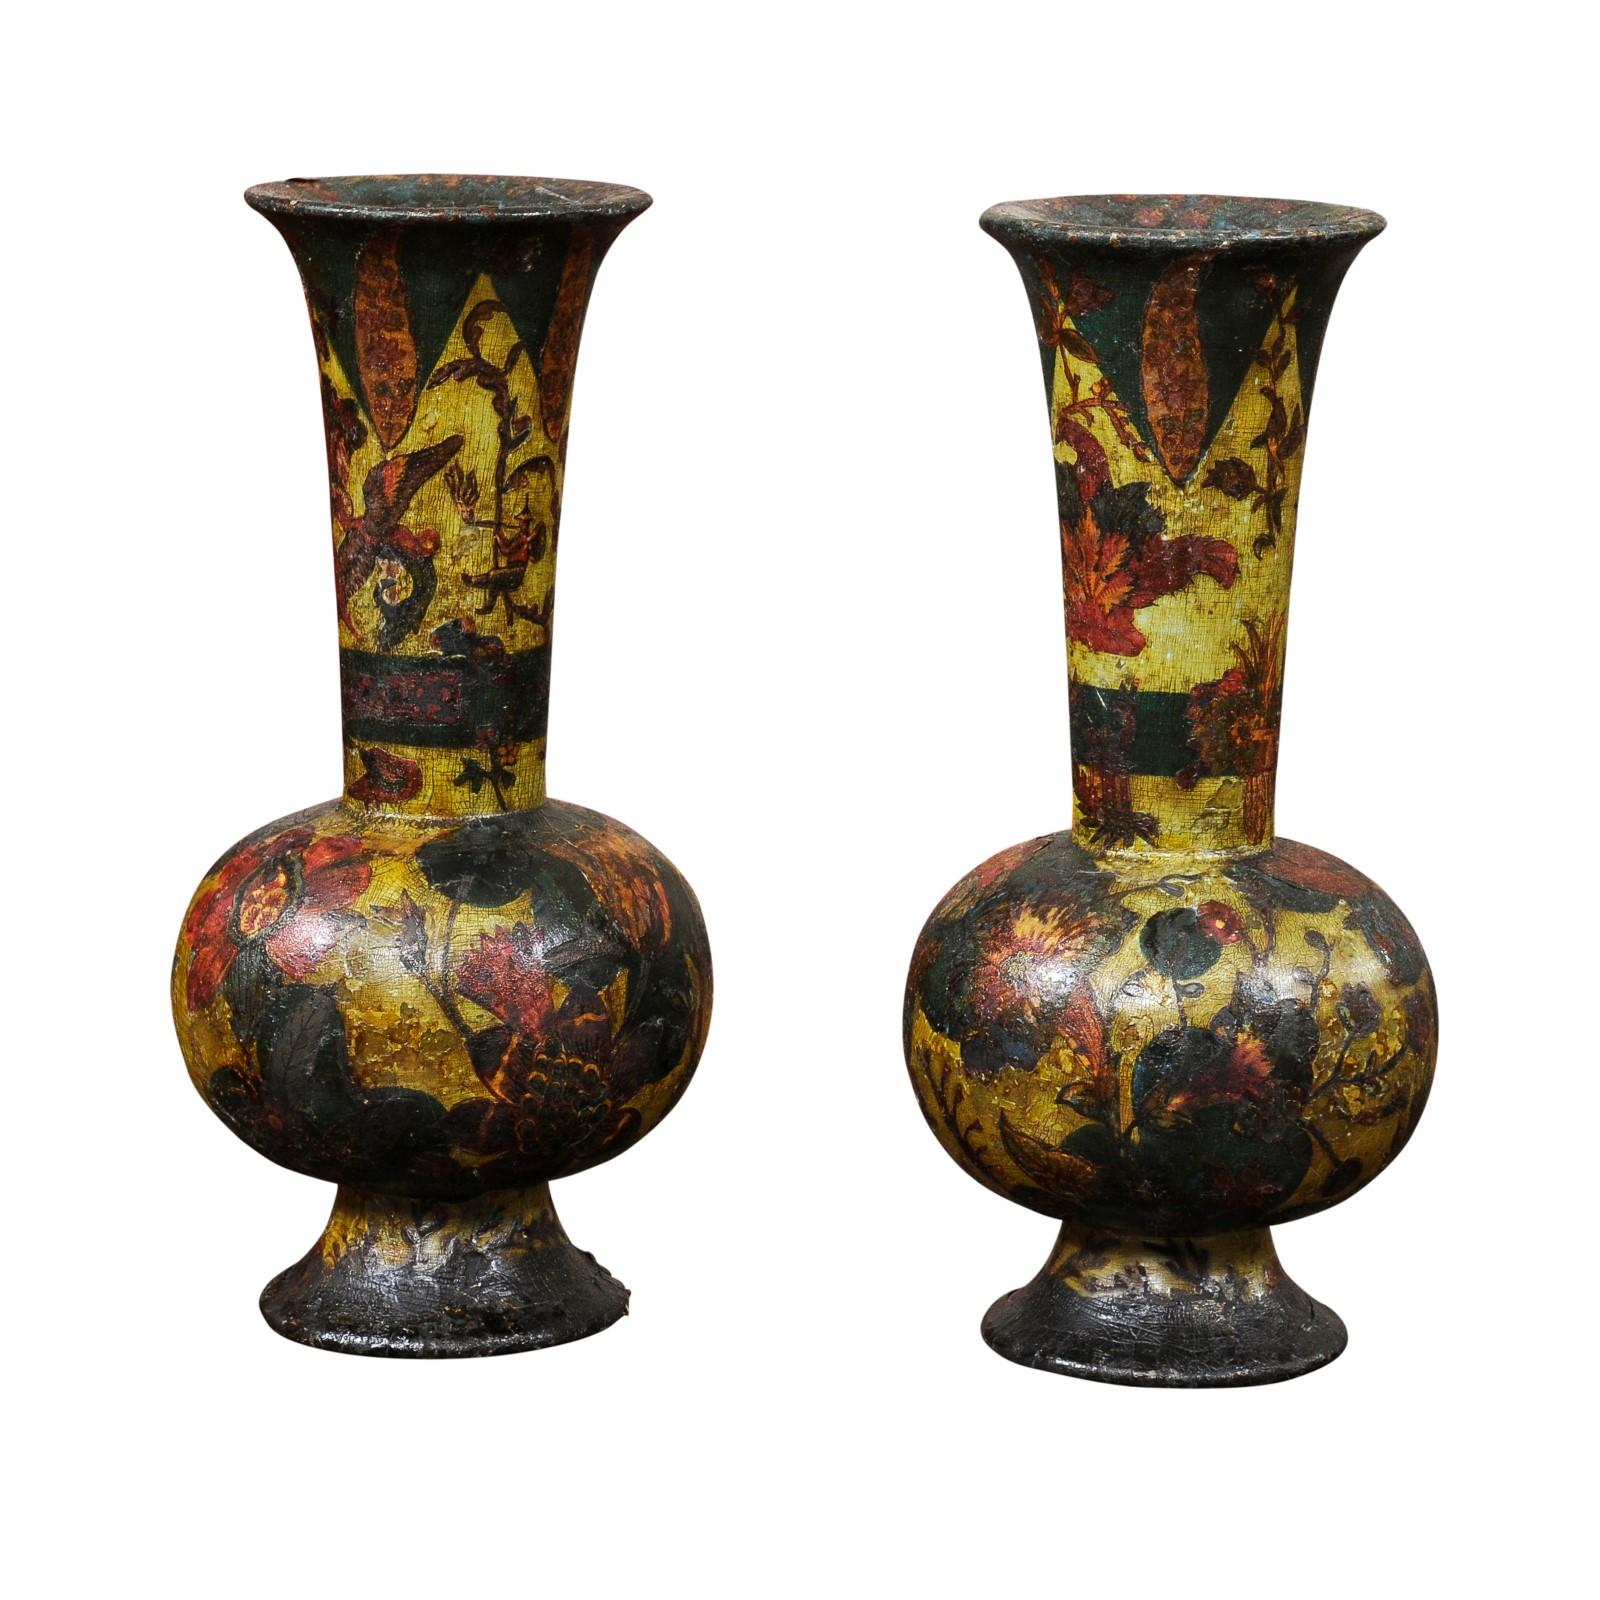  Pair of Italian Decoupage Wood Vases, 19th Century For Sale 7